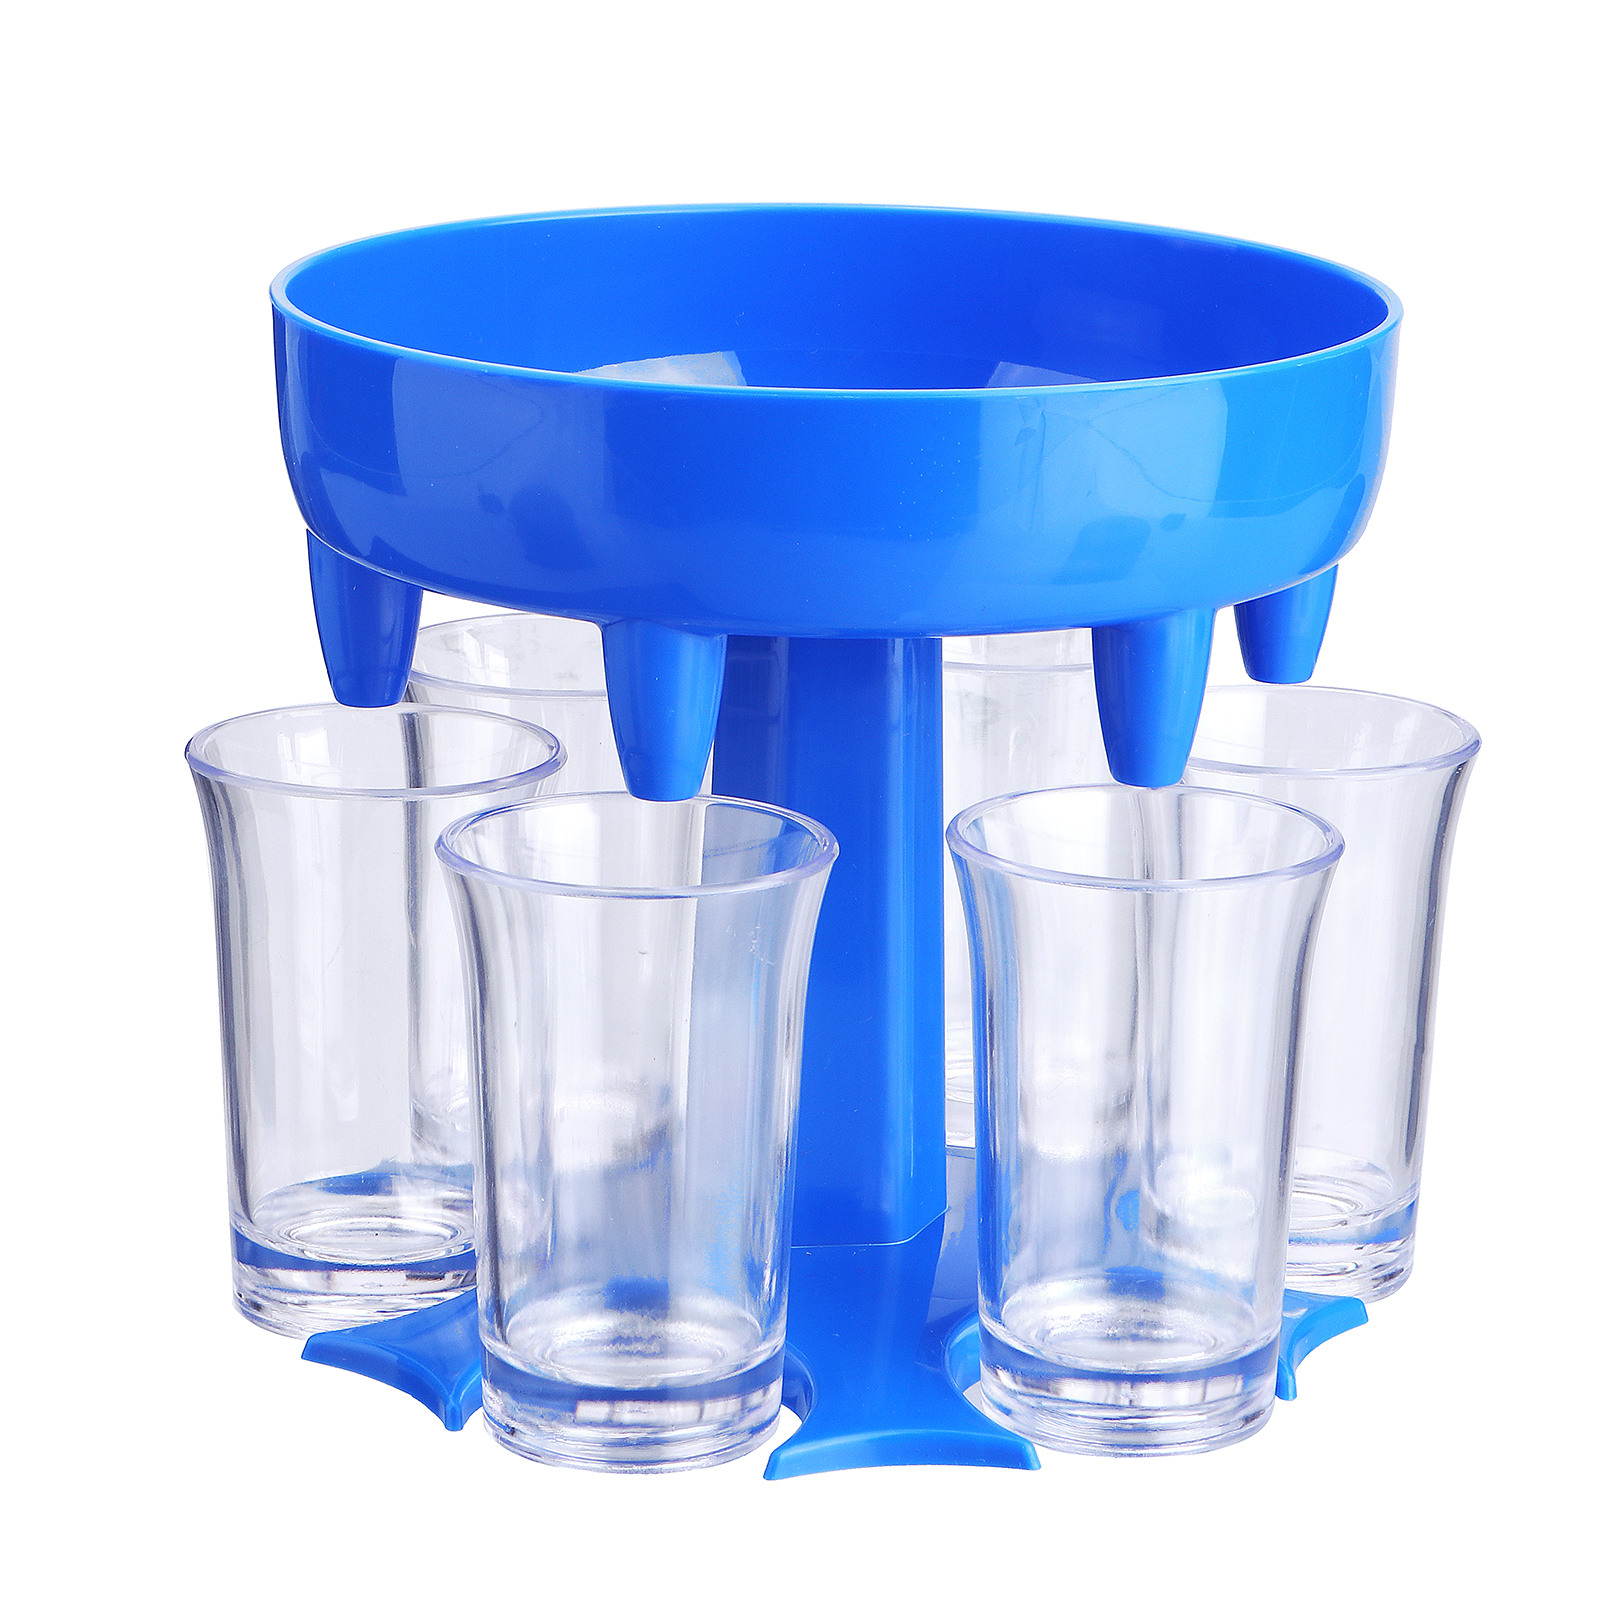 6-Shot-Glass-Dispenser-with-6-Cups-Hanging-Holder-Stand-Rack-Carrier-Caddy-Liquor-Dispenser-Gifts-Dr-1898947-8